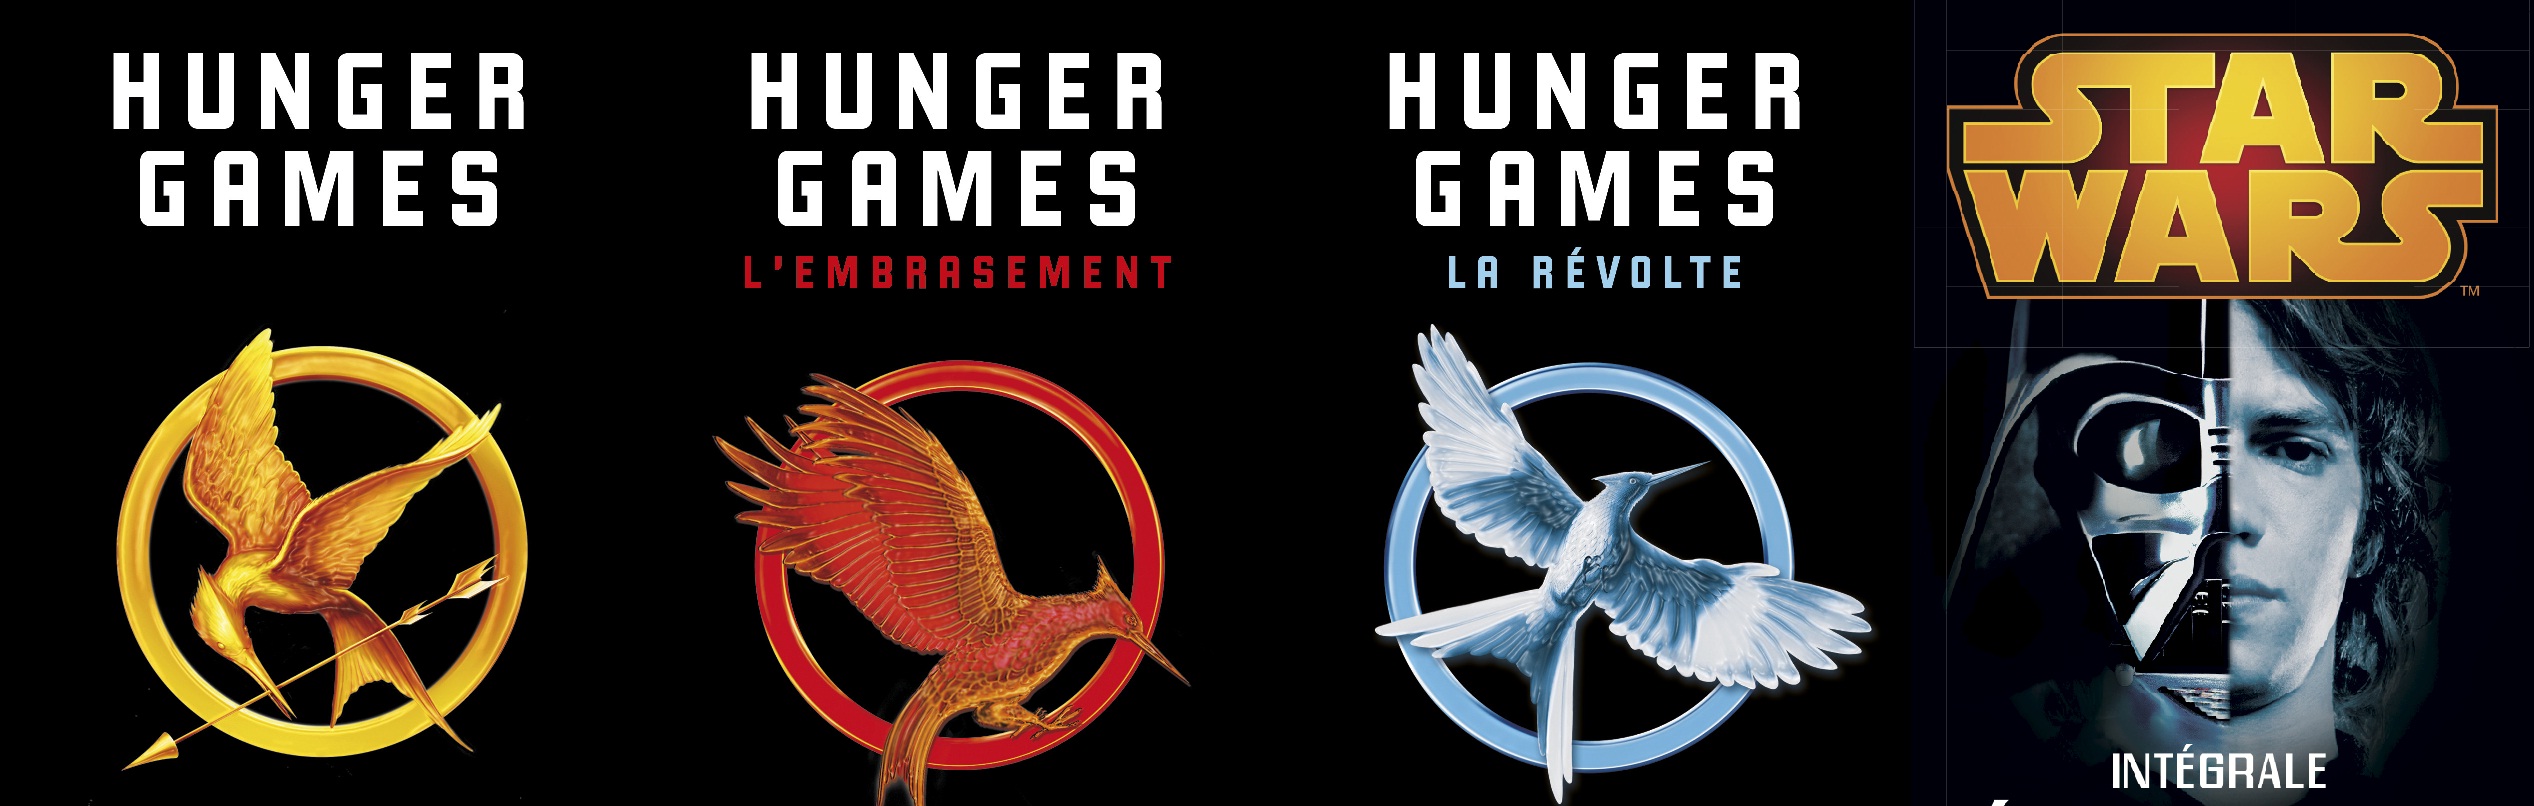 star wars - [Concours terminé] Hunger Games et Star Wars : gagnez les livres des films CCR star wars hunger games couv